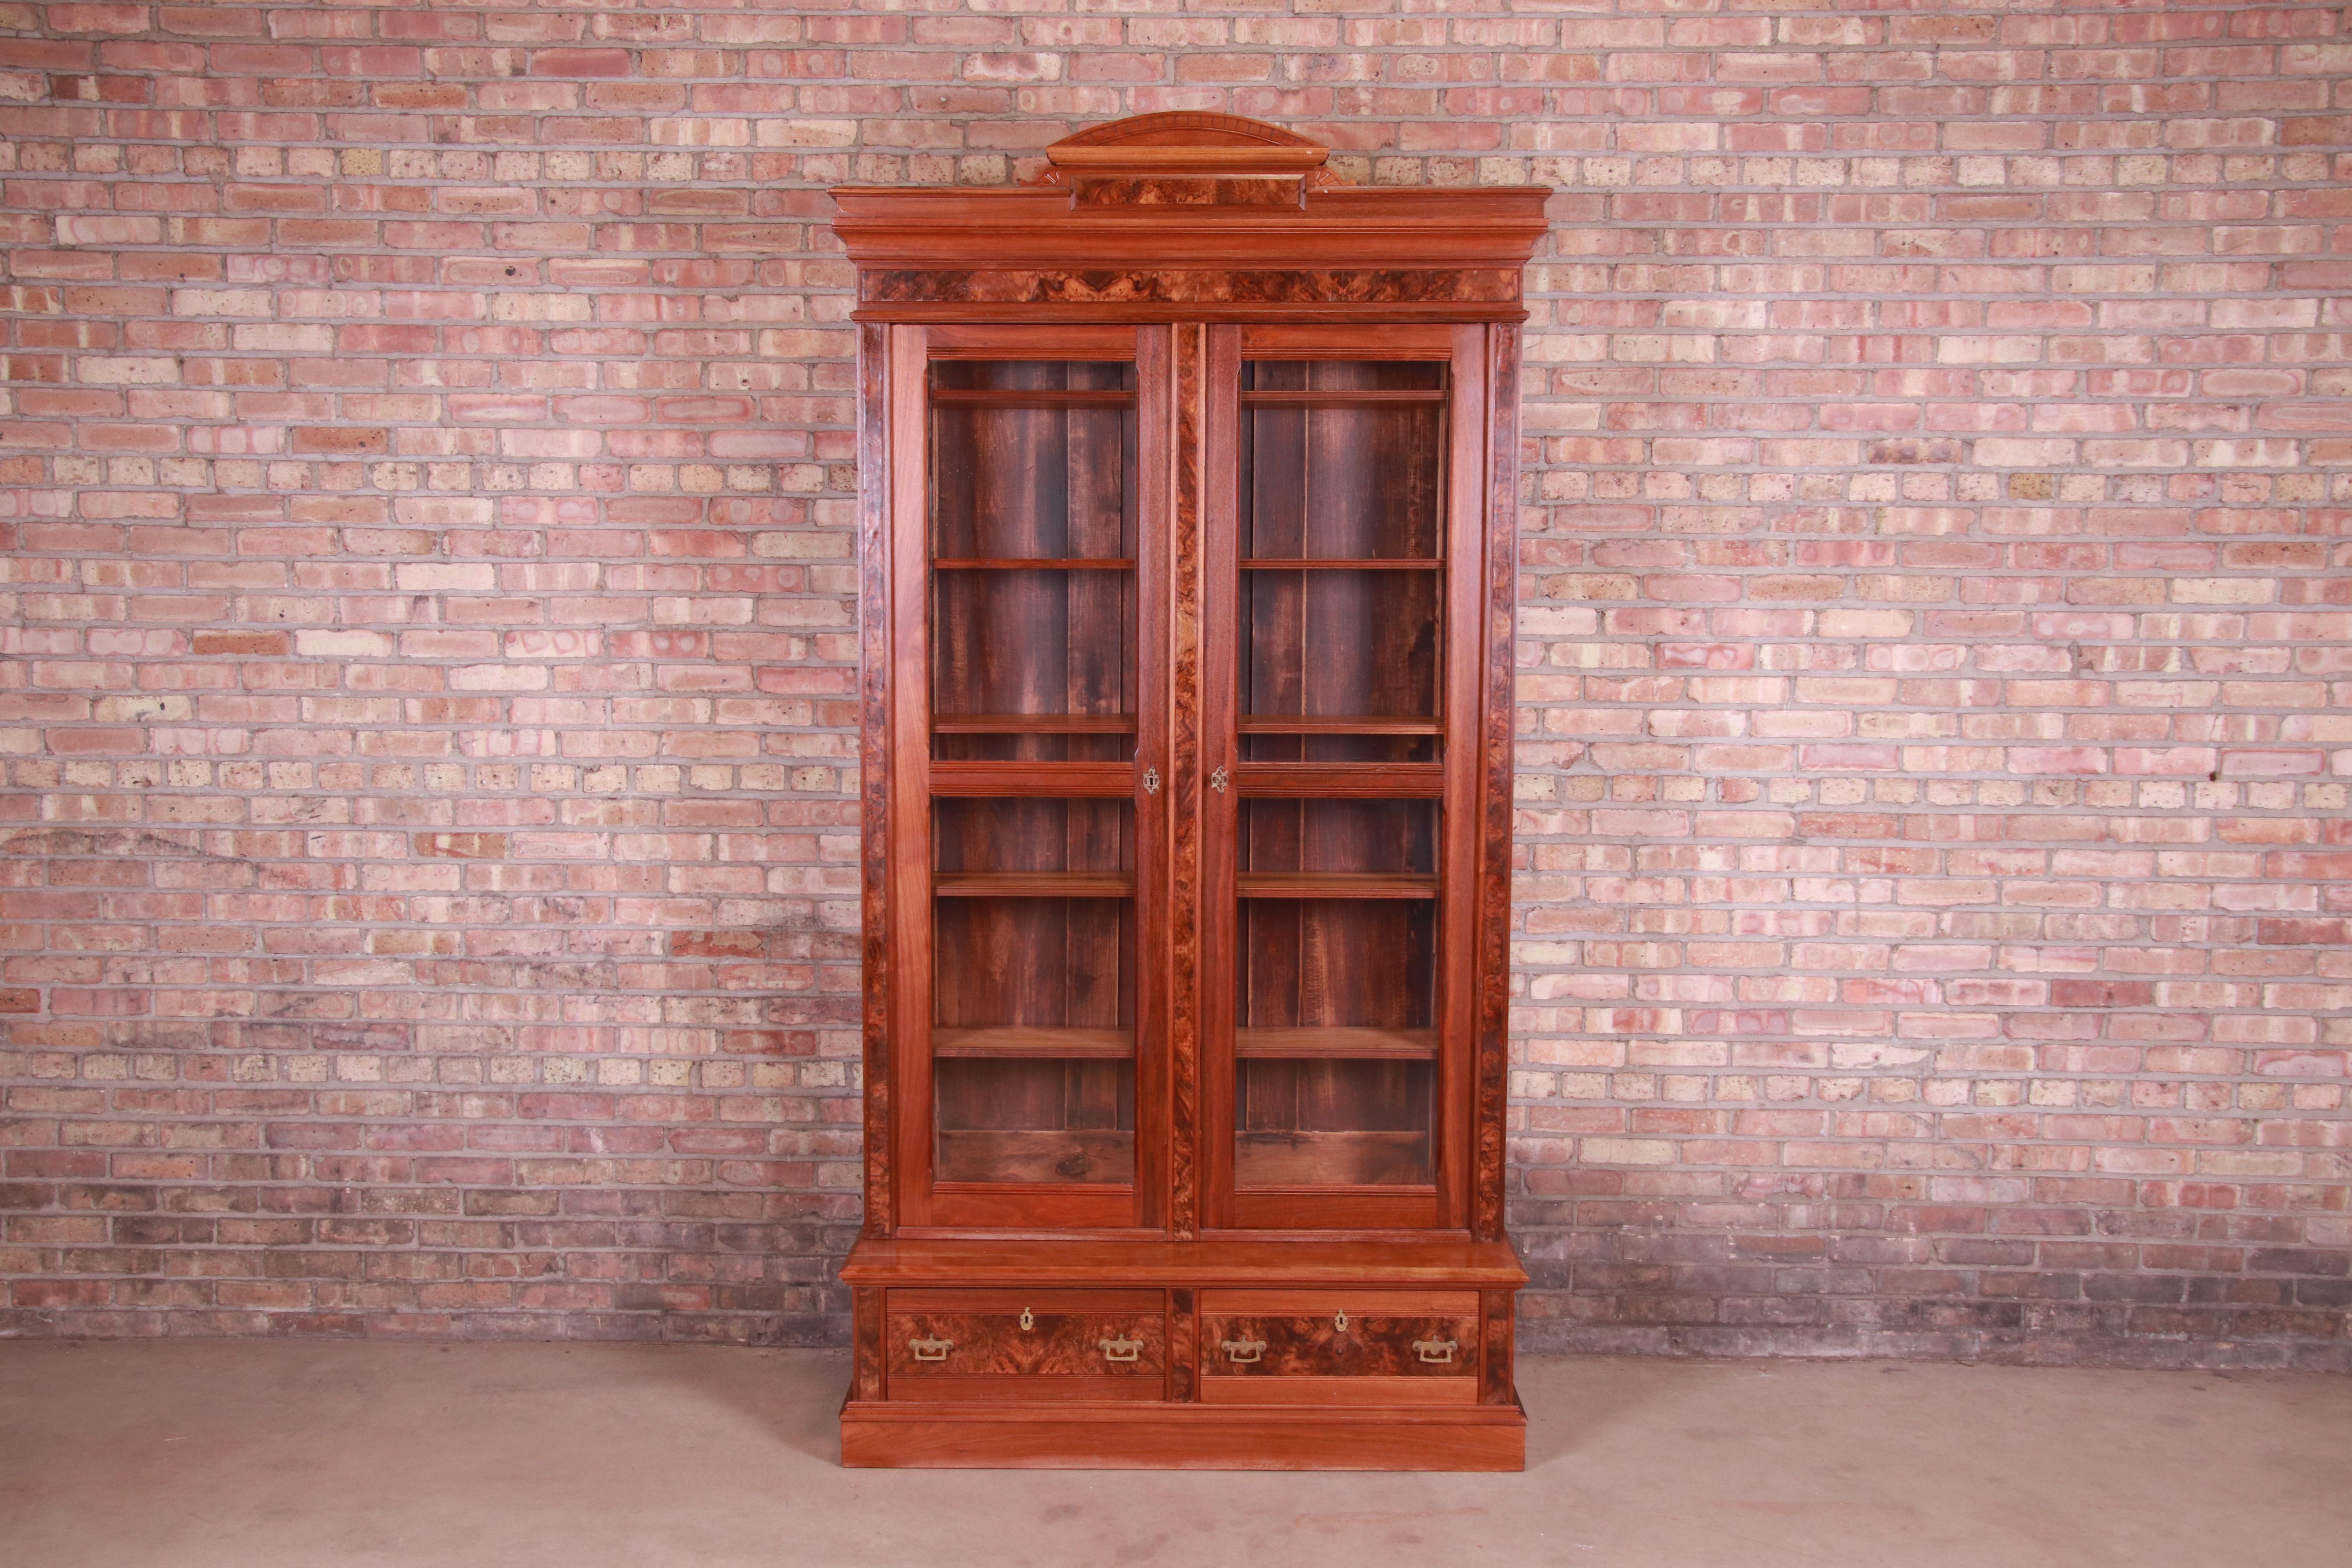 American Antique Monumental Eastlake Victorian Burled Walnut Bookcase, circa 1860s